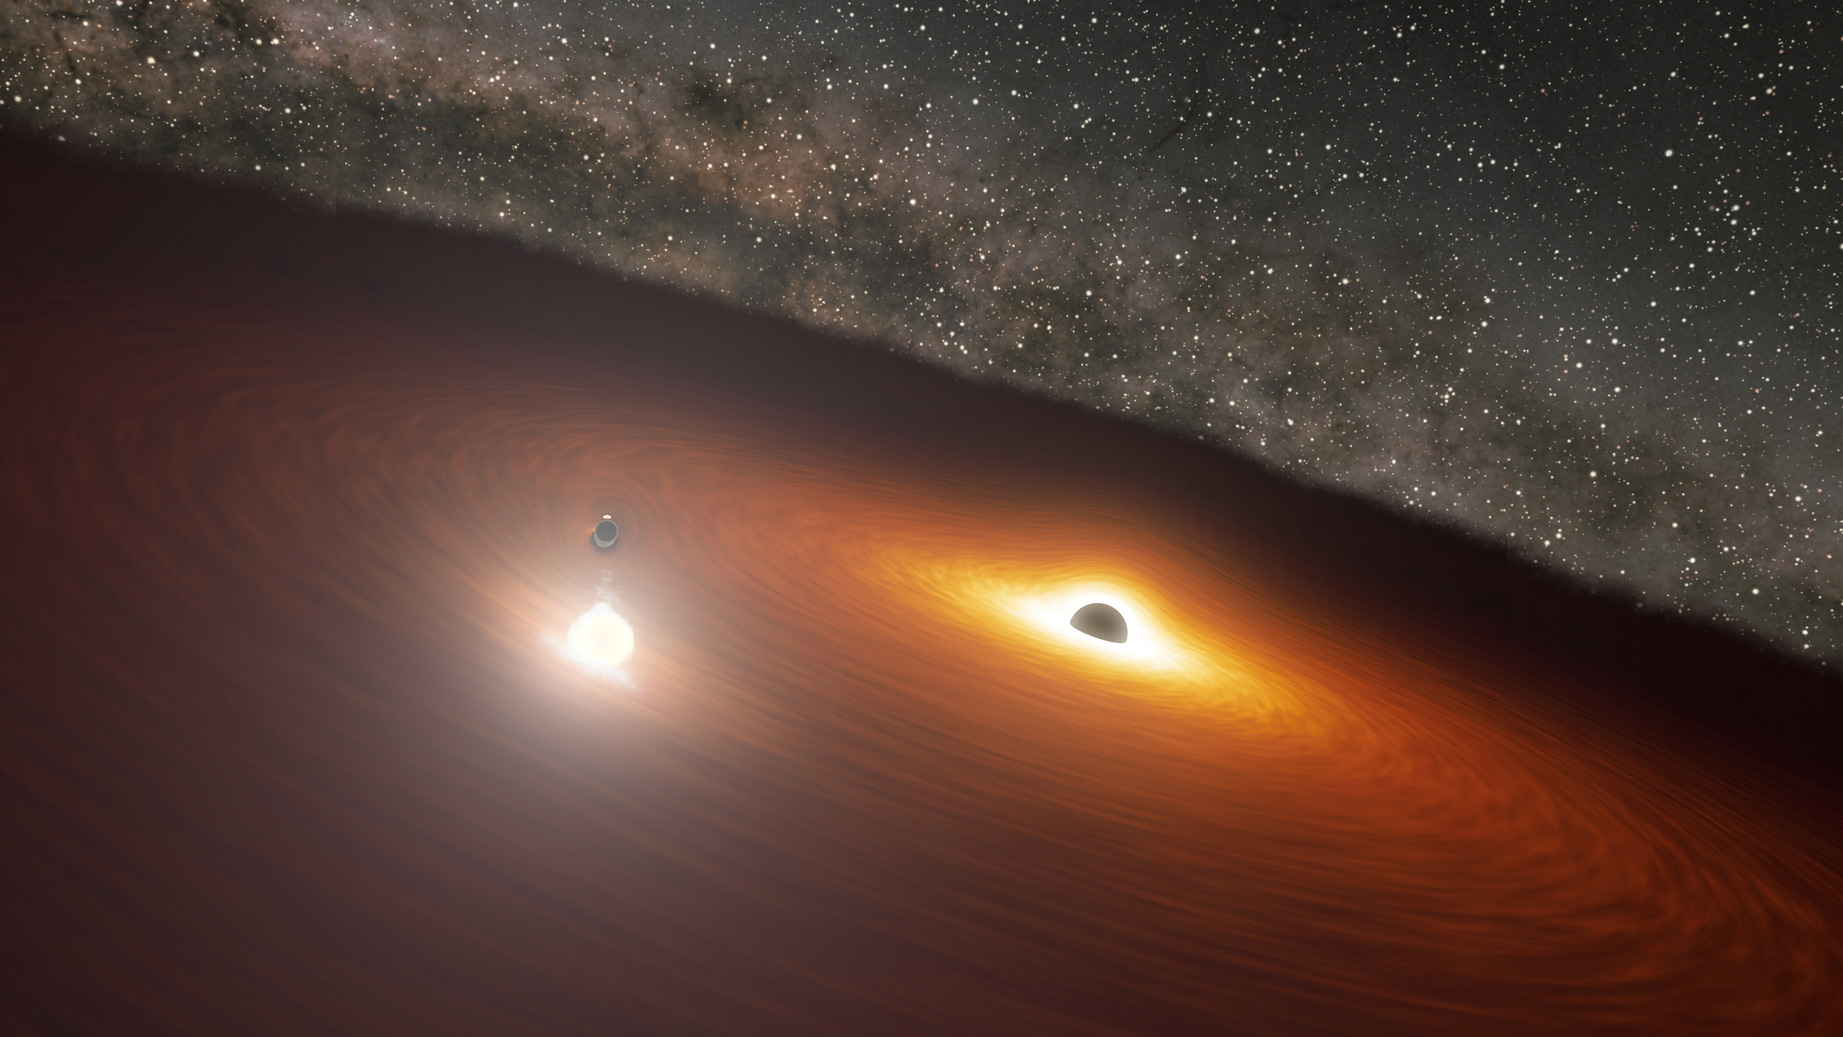 Artist's image of two massive black holes in the OJ 287 galaxy